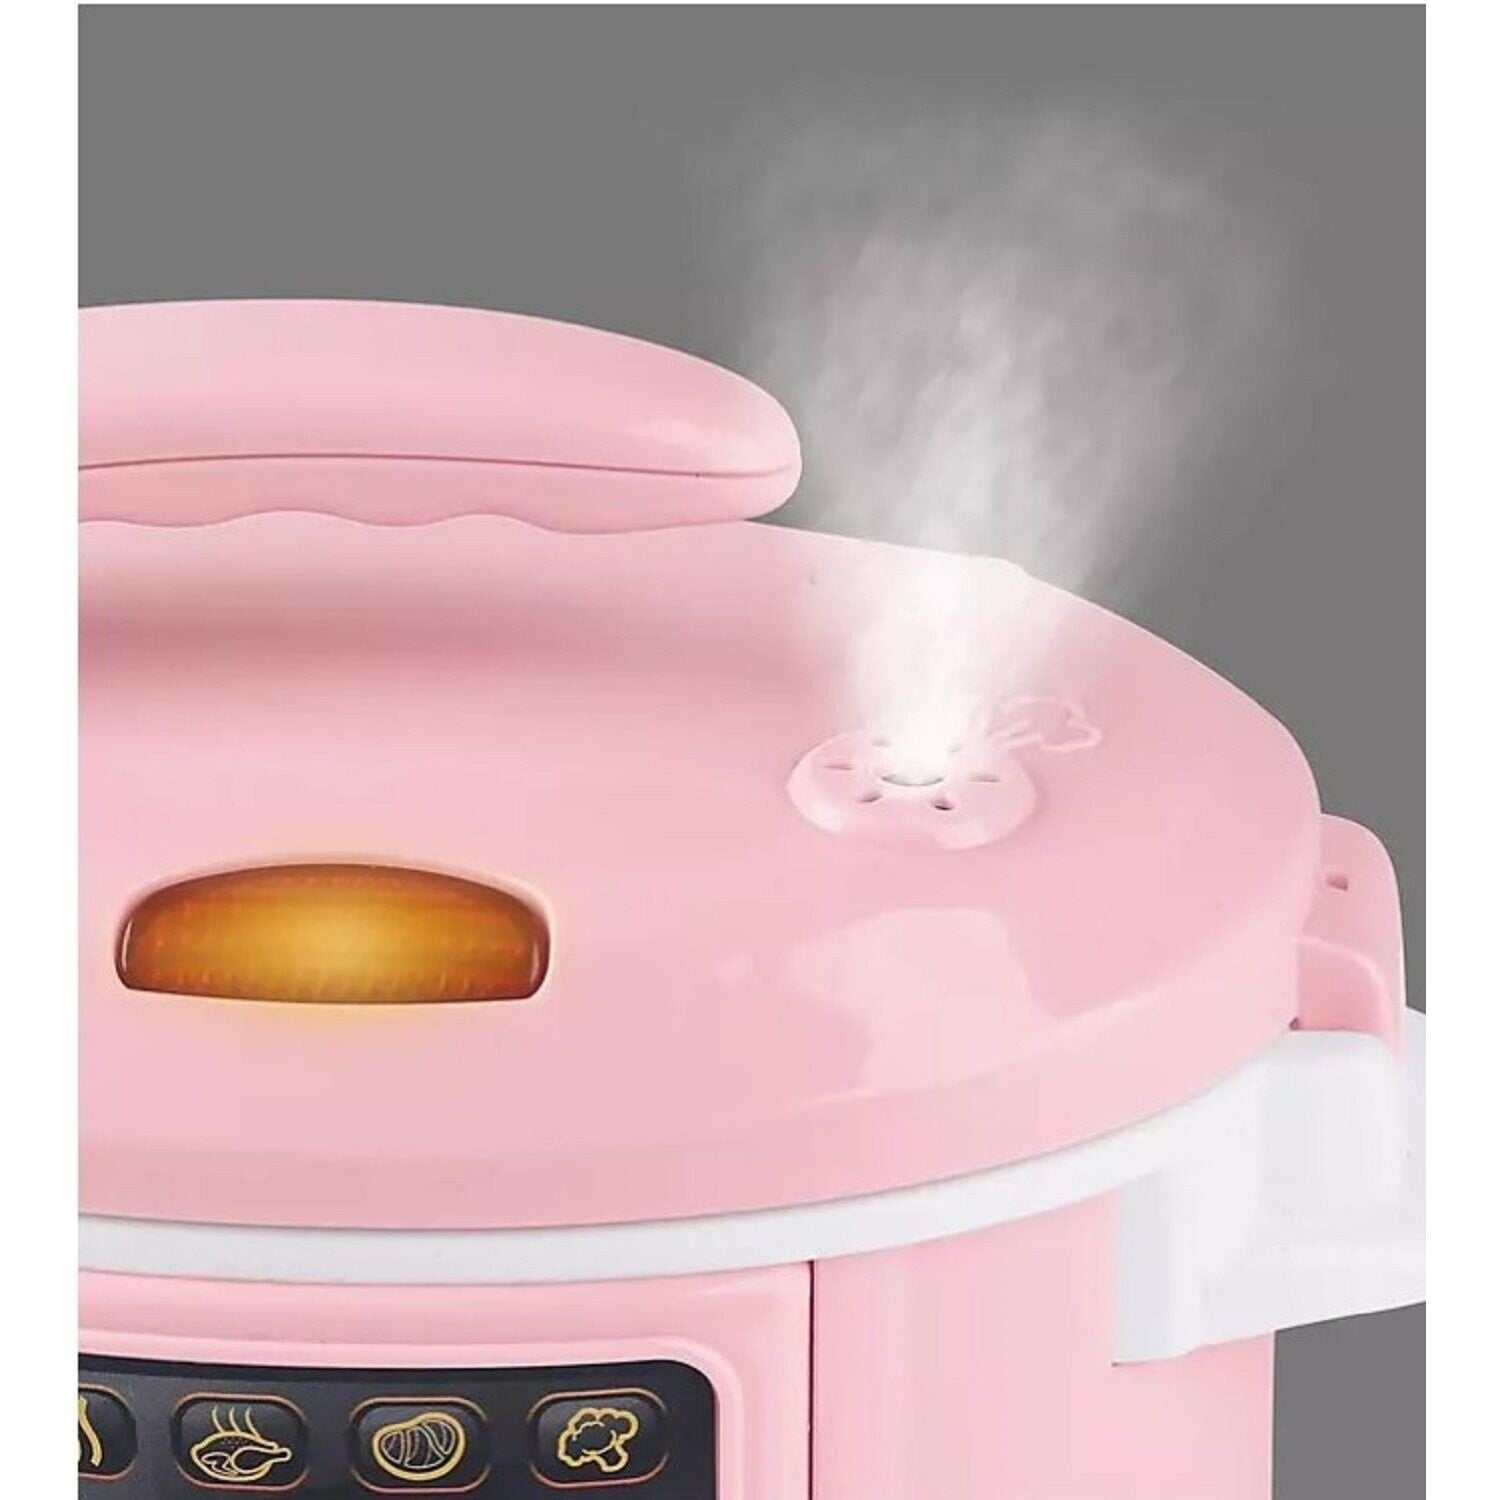 Member S Mark Smart Kitchen Appliances (Pink) 